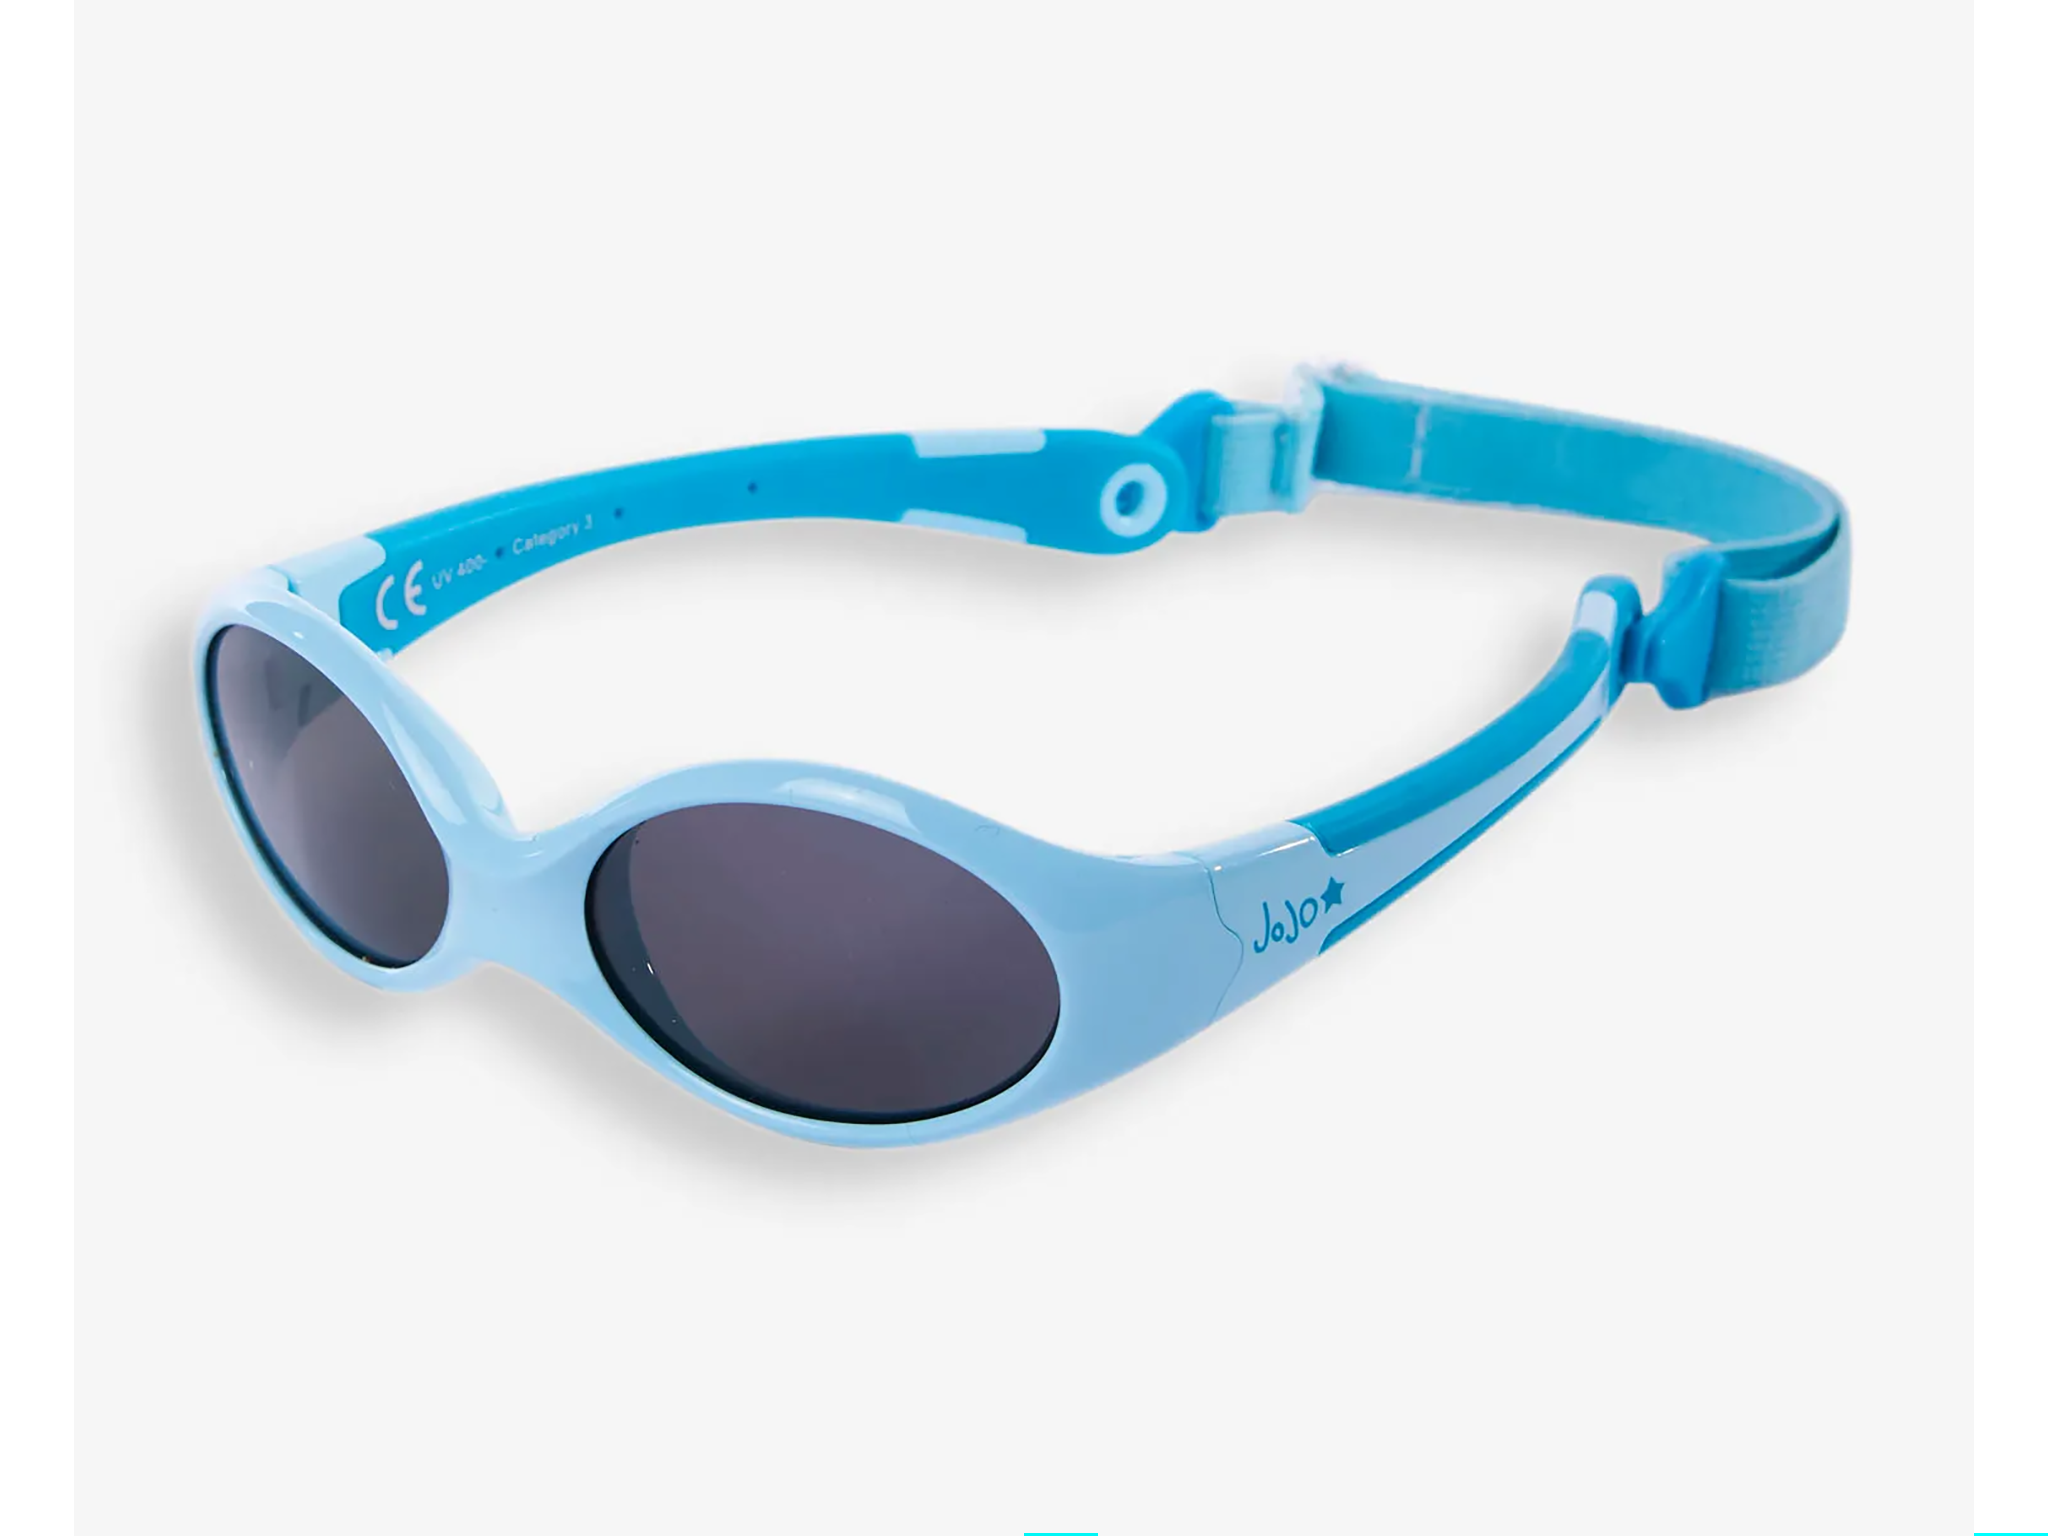 JoJo Maman Bebe flexible sunglasses with straps